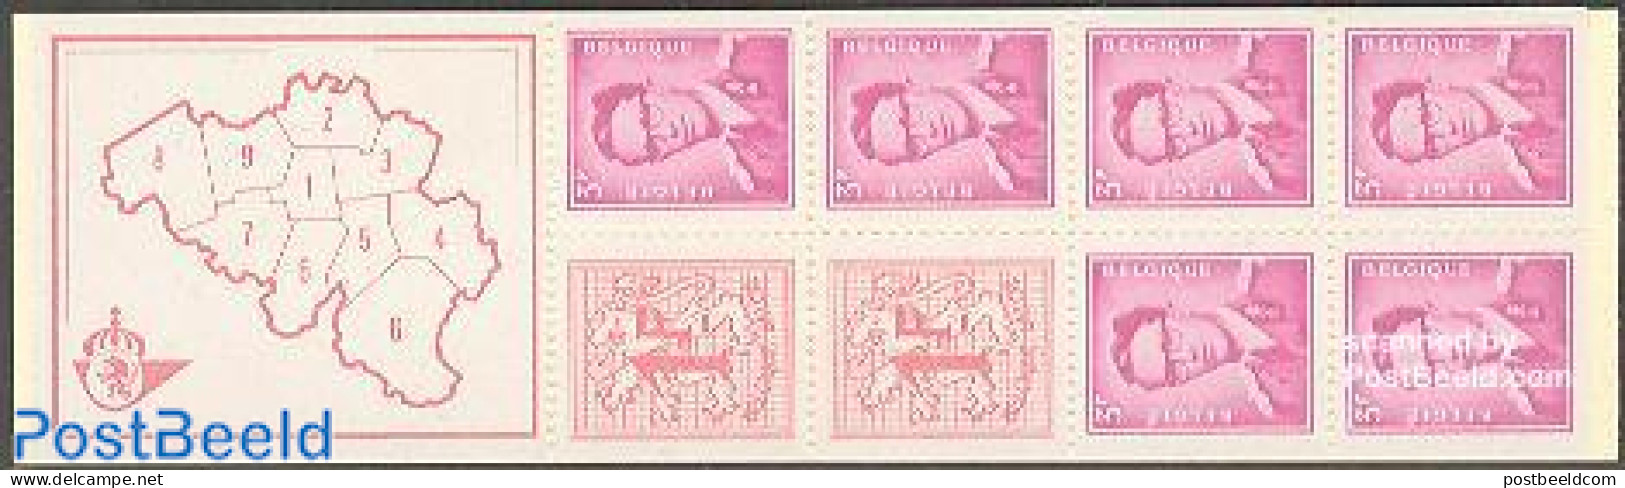 Belgium 1969 Booklet 6x3f, 2x1f, Mint NH, Stamp Booklets - Ongebruikt